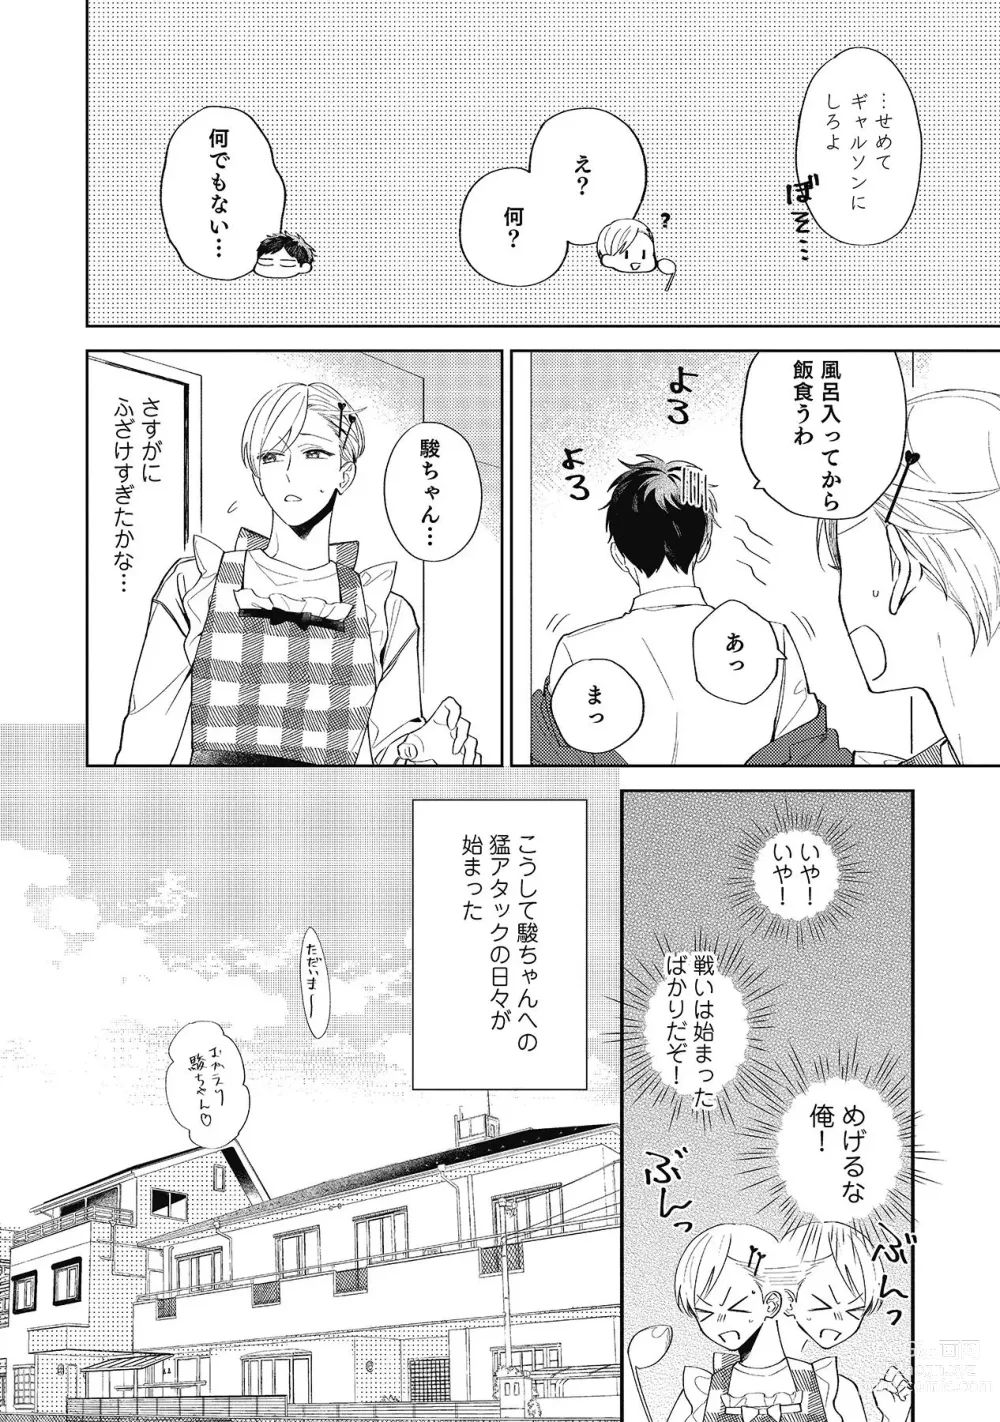 Page 18 of manga Sentimental Darling